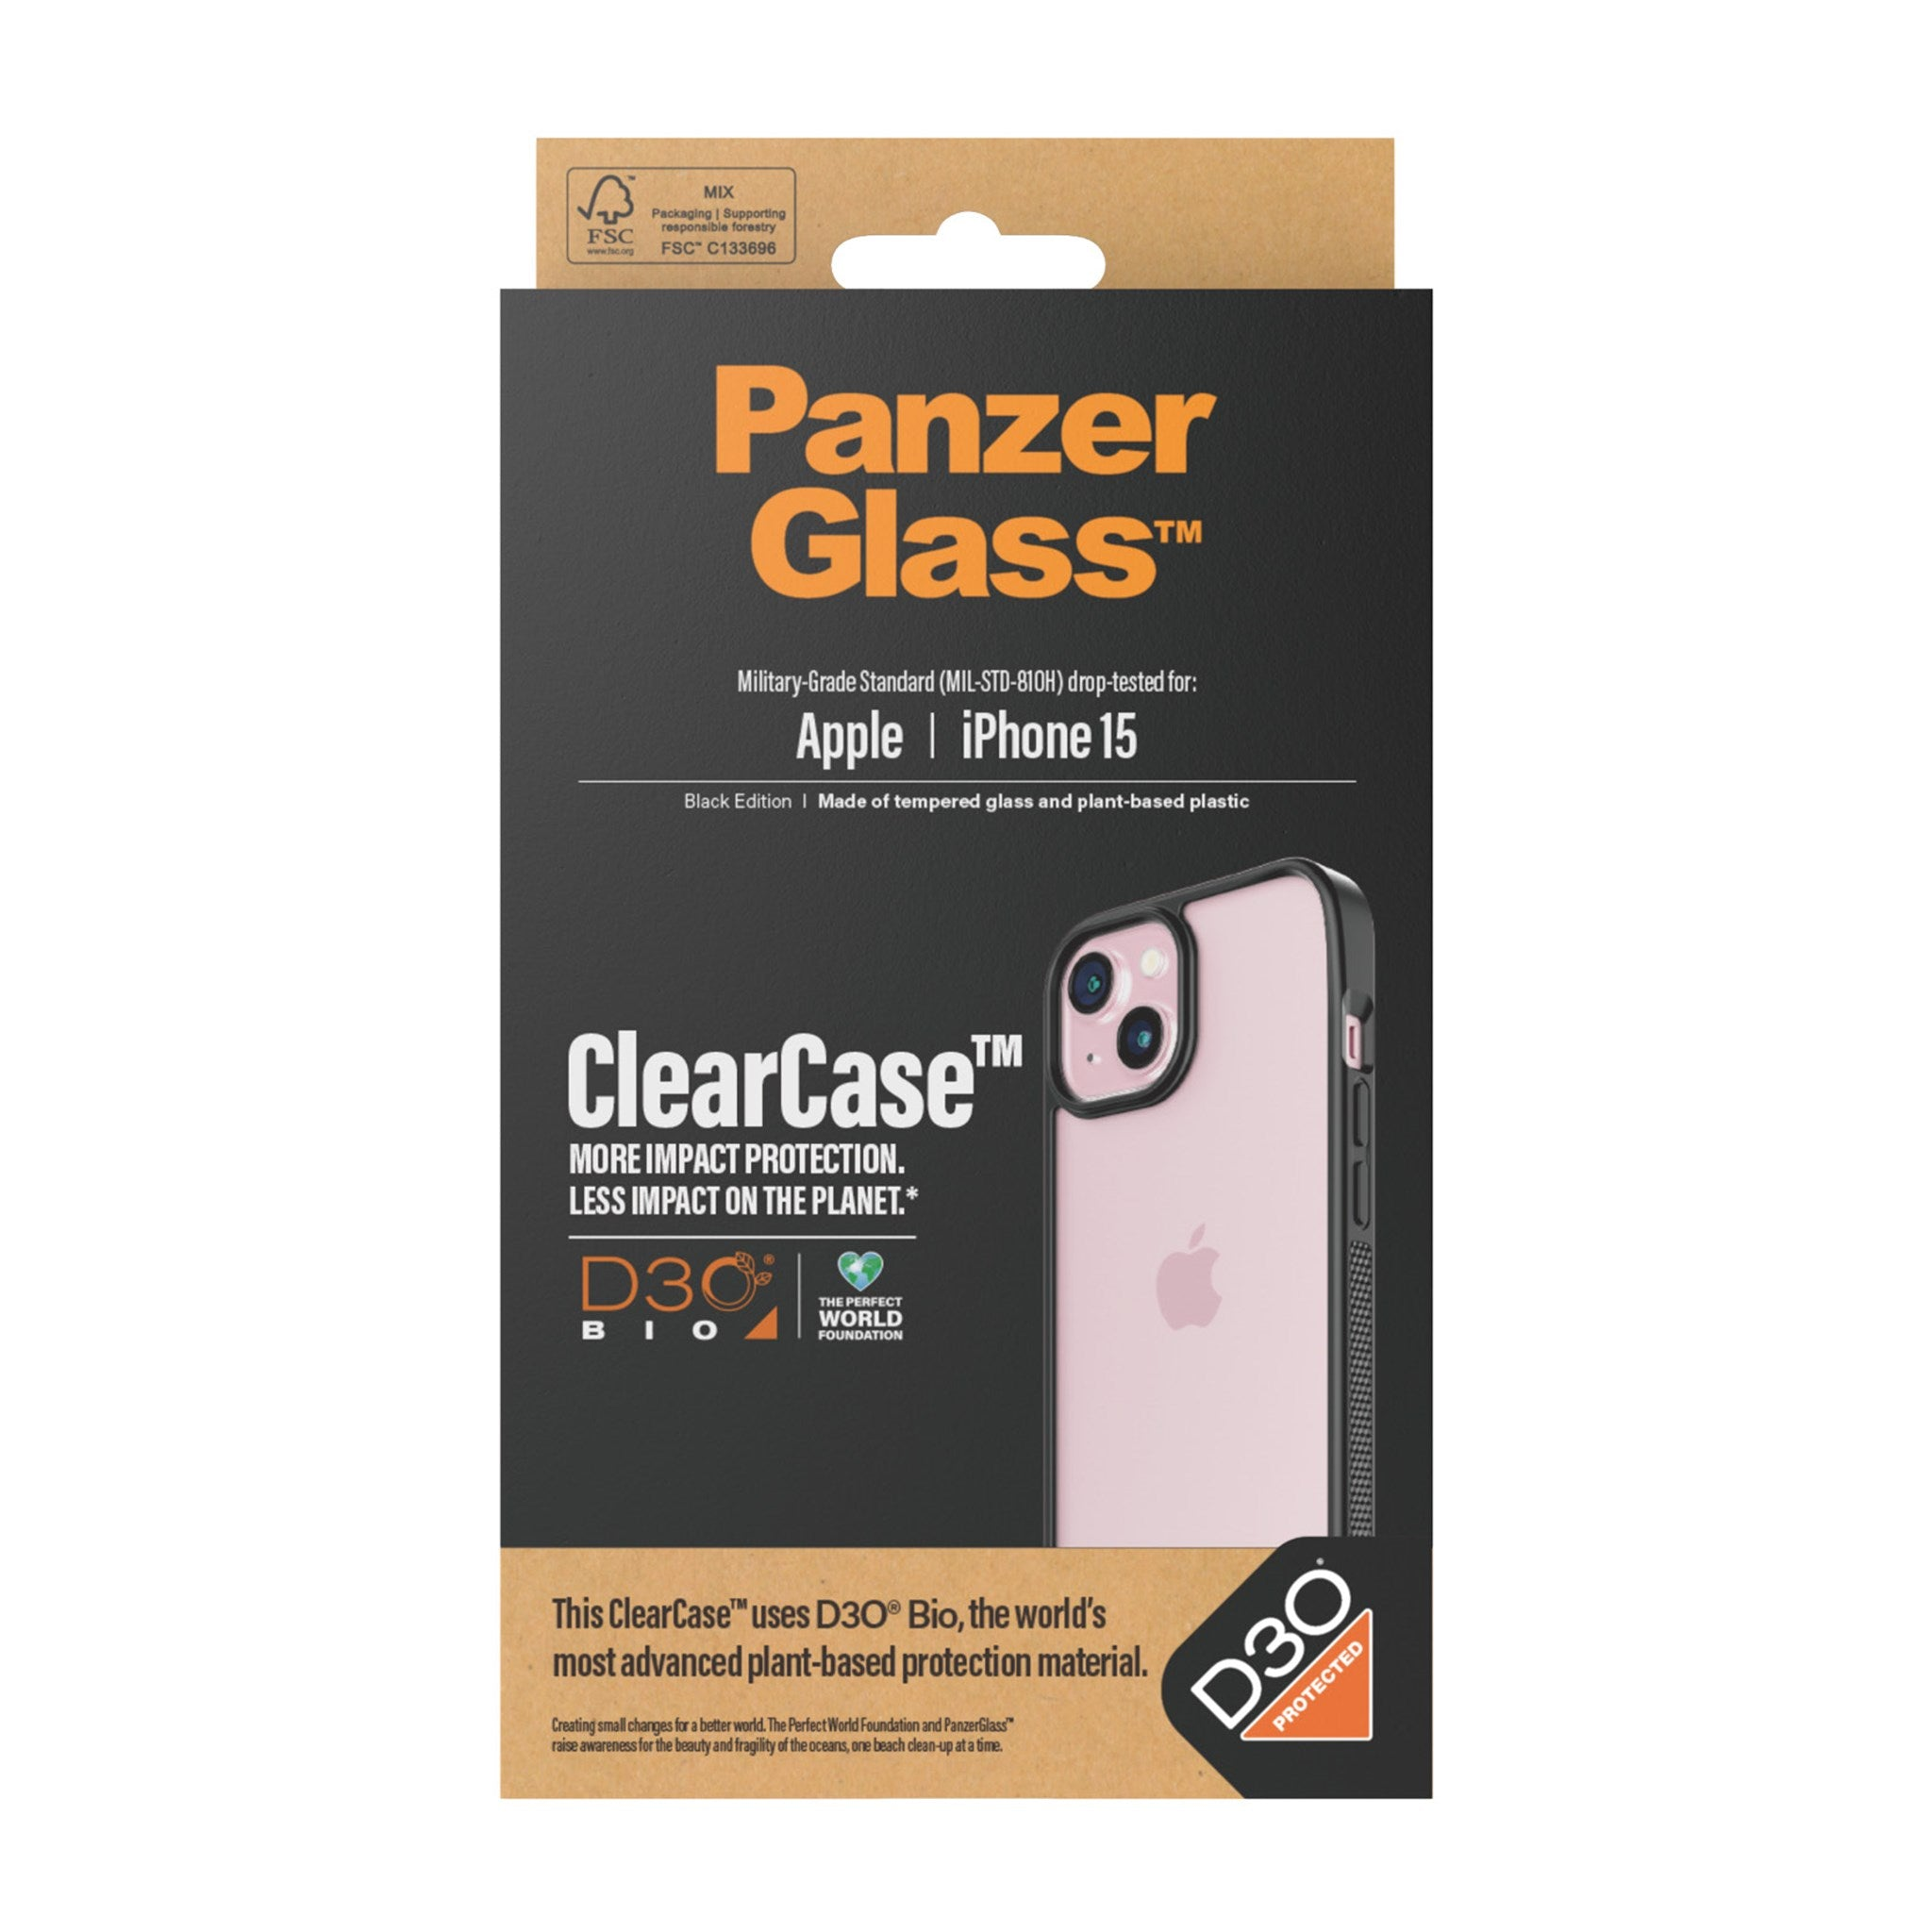 Case(für D3O PANZERGLASS Phone 15) iPhone ClearCase mit Apple